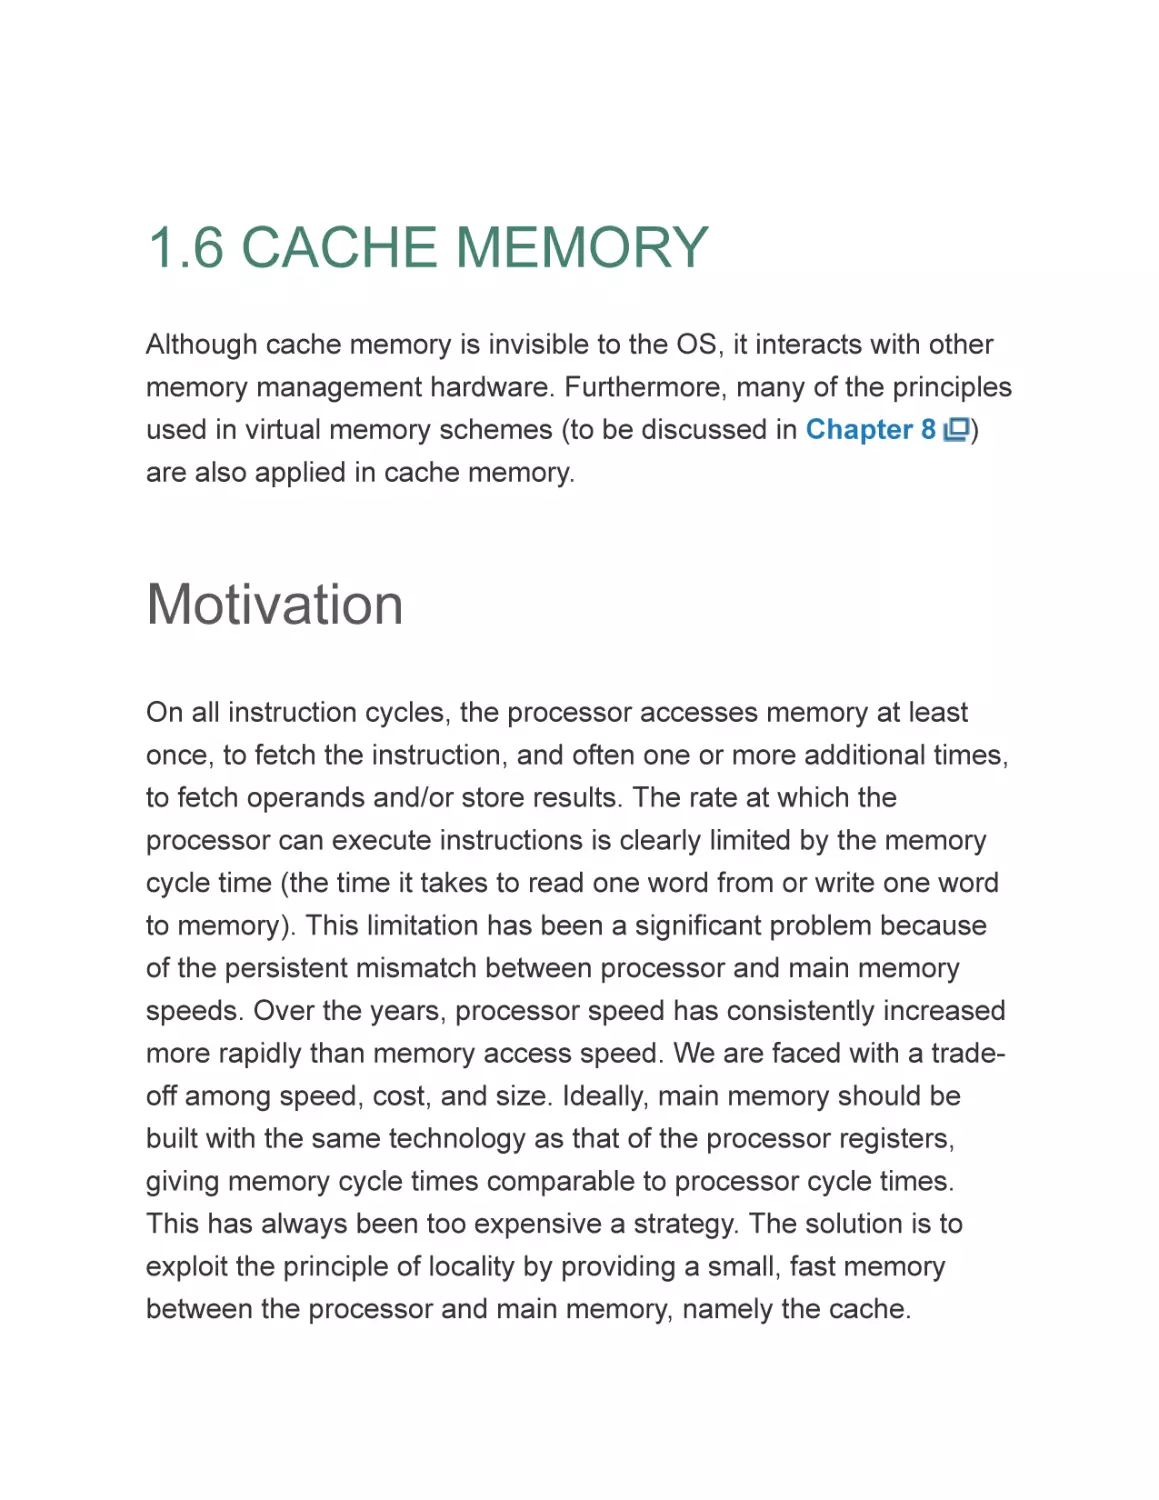 1.6 CACHE MEMORY
Motivation